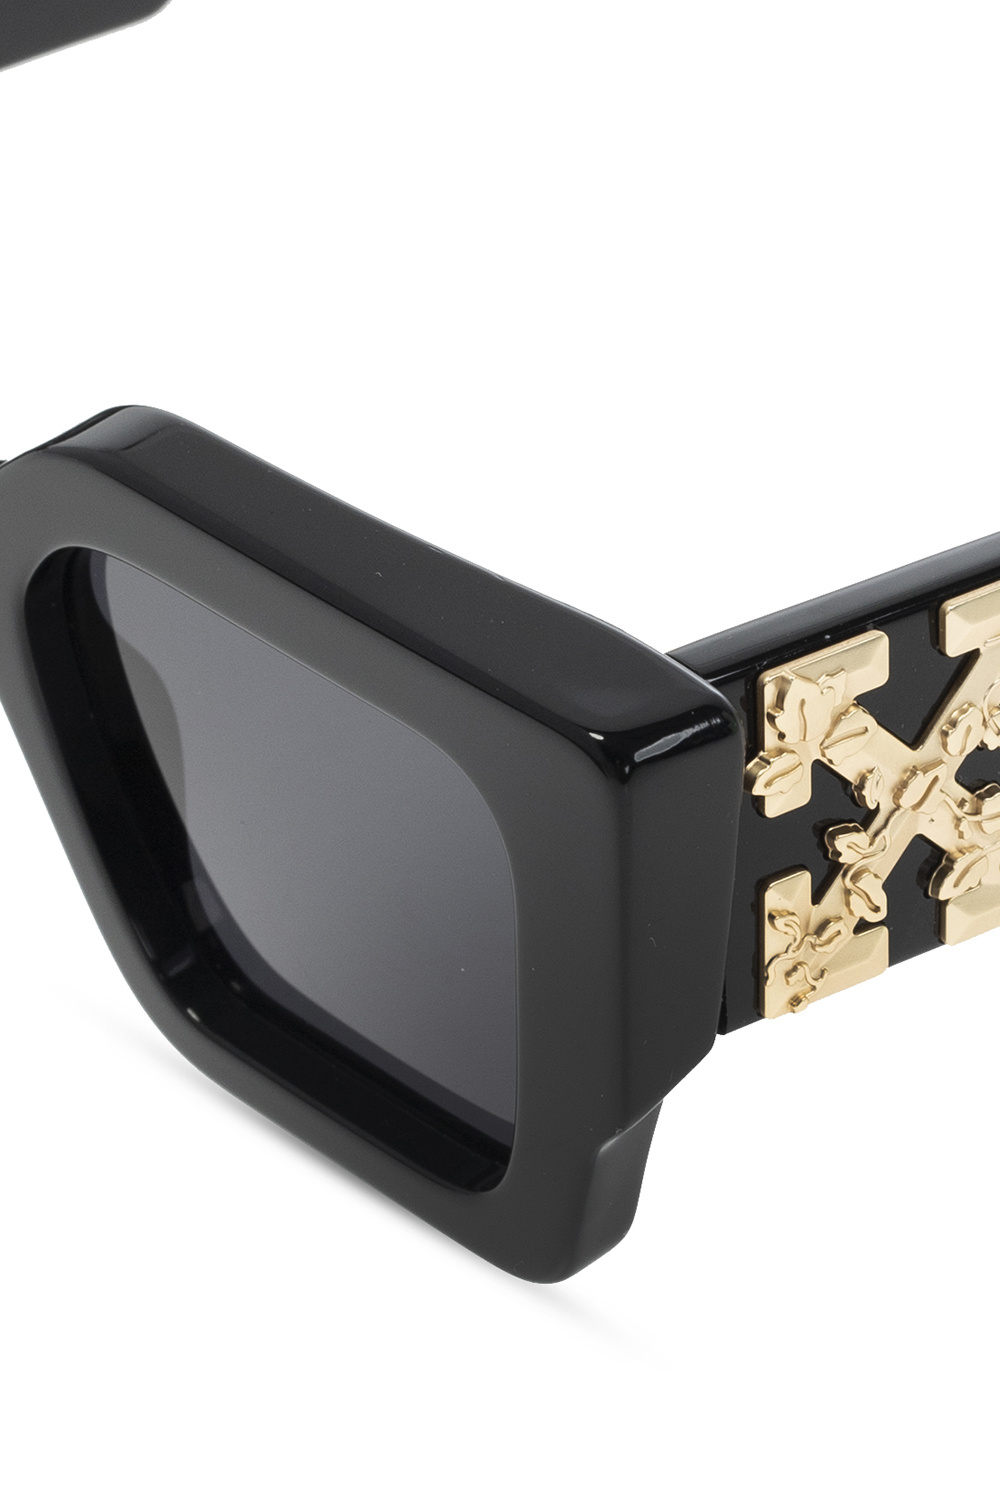 Off-White roberto cavalli chunky square frame sunglasses item